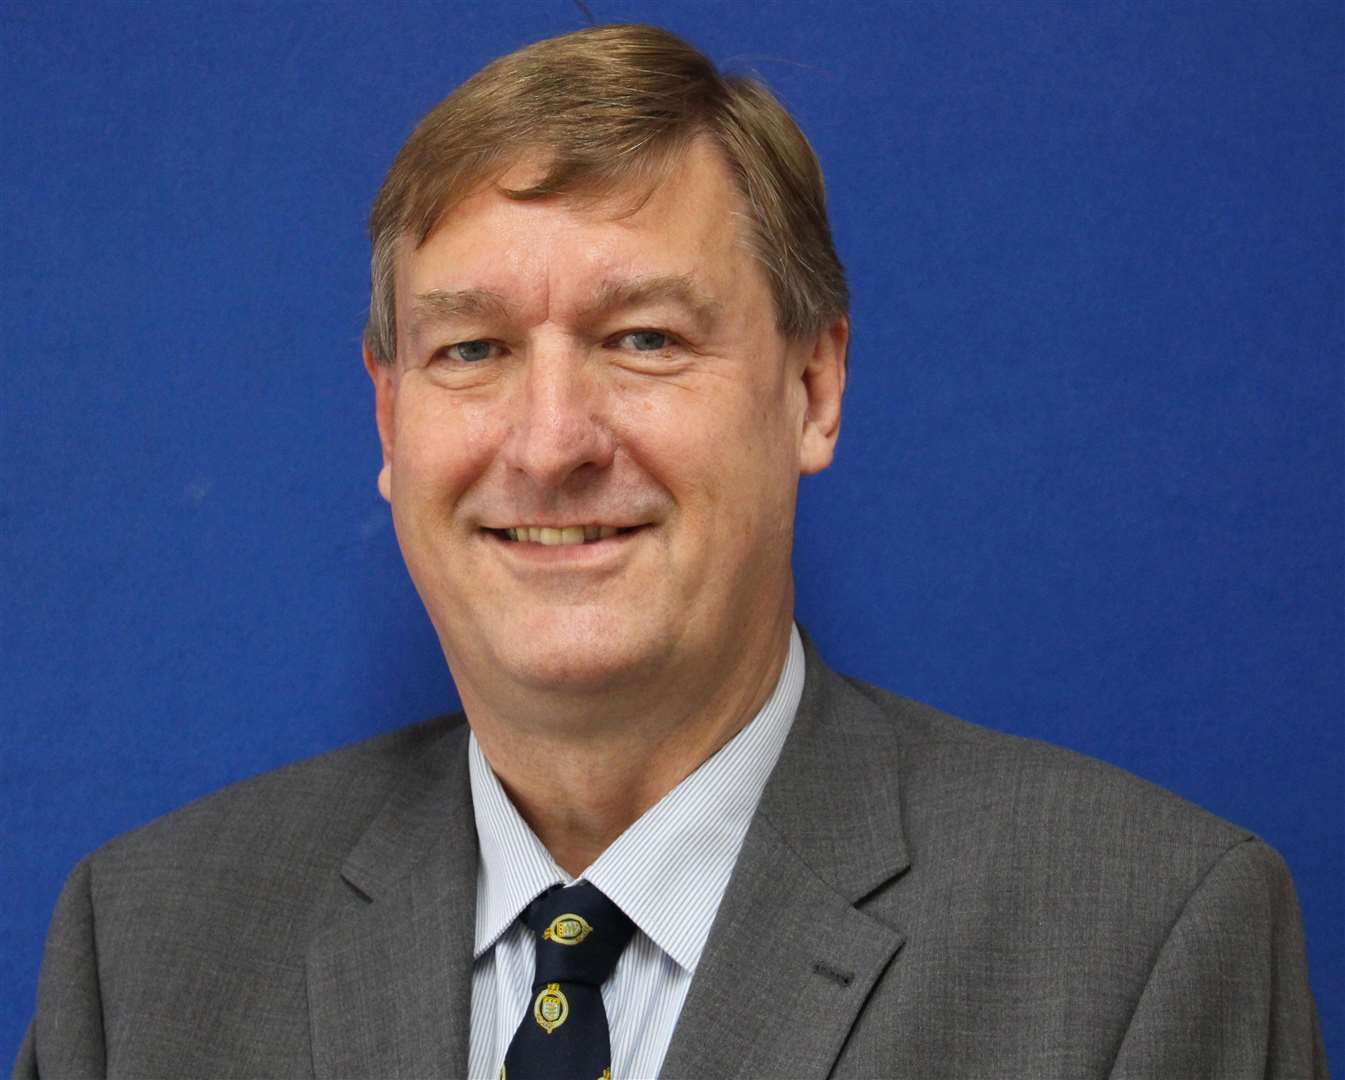 Dover District Council leader Cllr Keith Morris